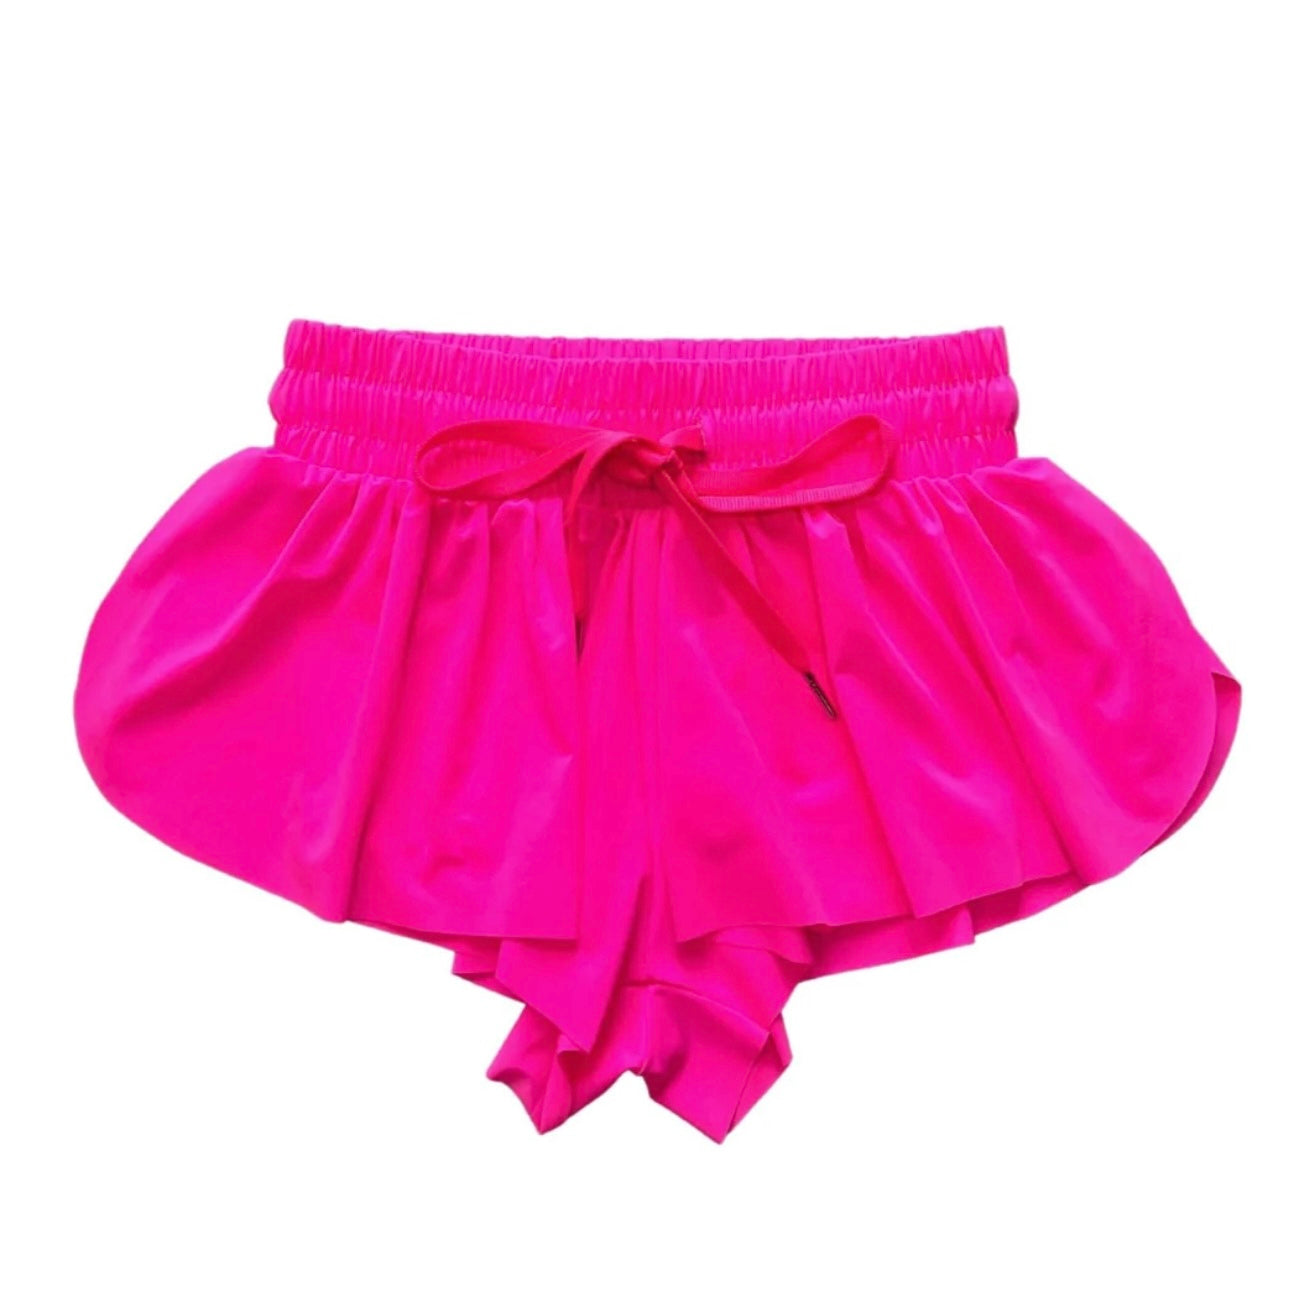 Katie J NYC  Junior Farrah Shorts - Hot Pink